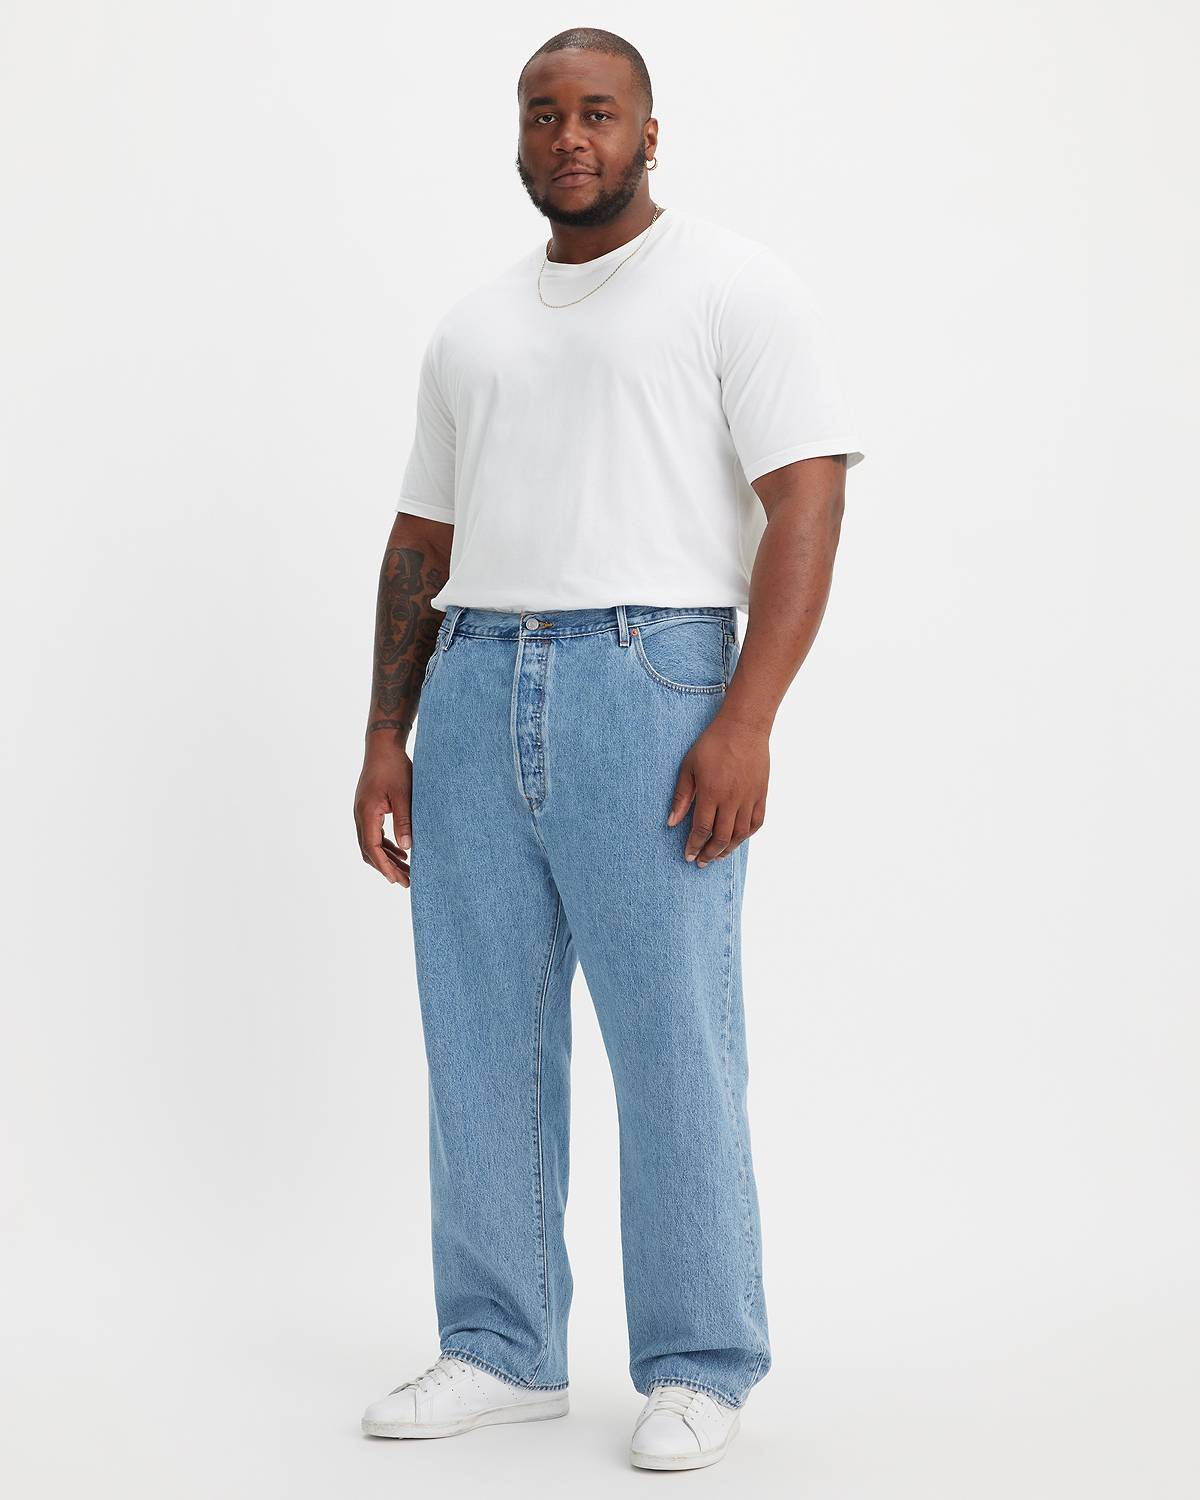 Men's Western Jeans & Pants